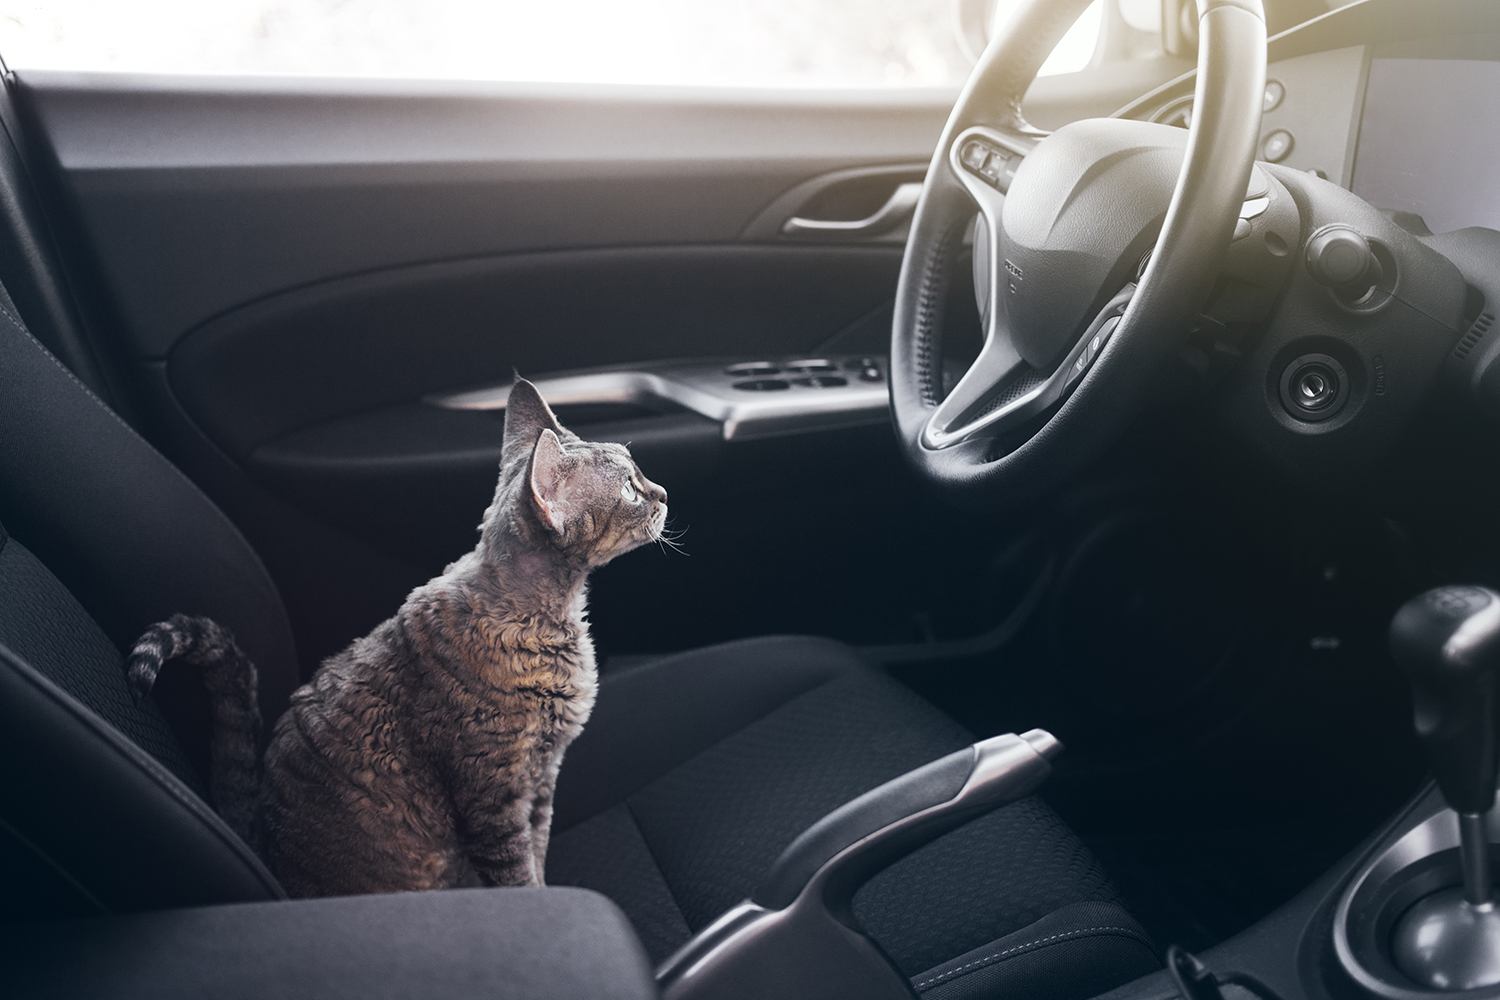 Transporter son chat en voiture : nos conseils